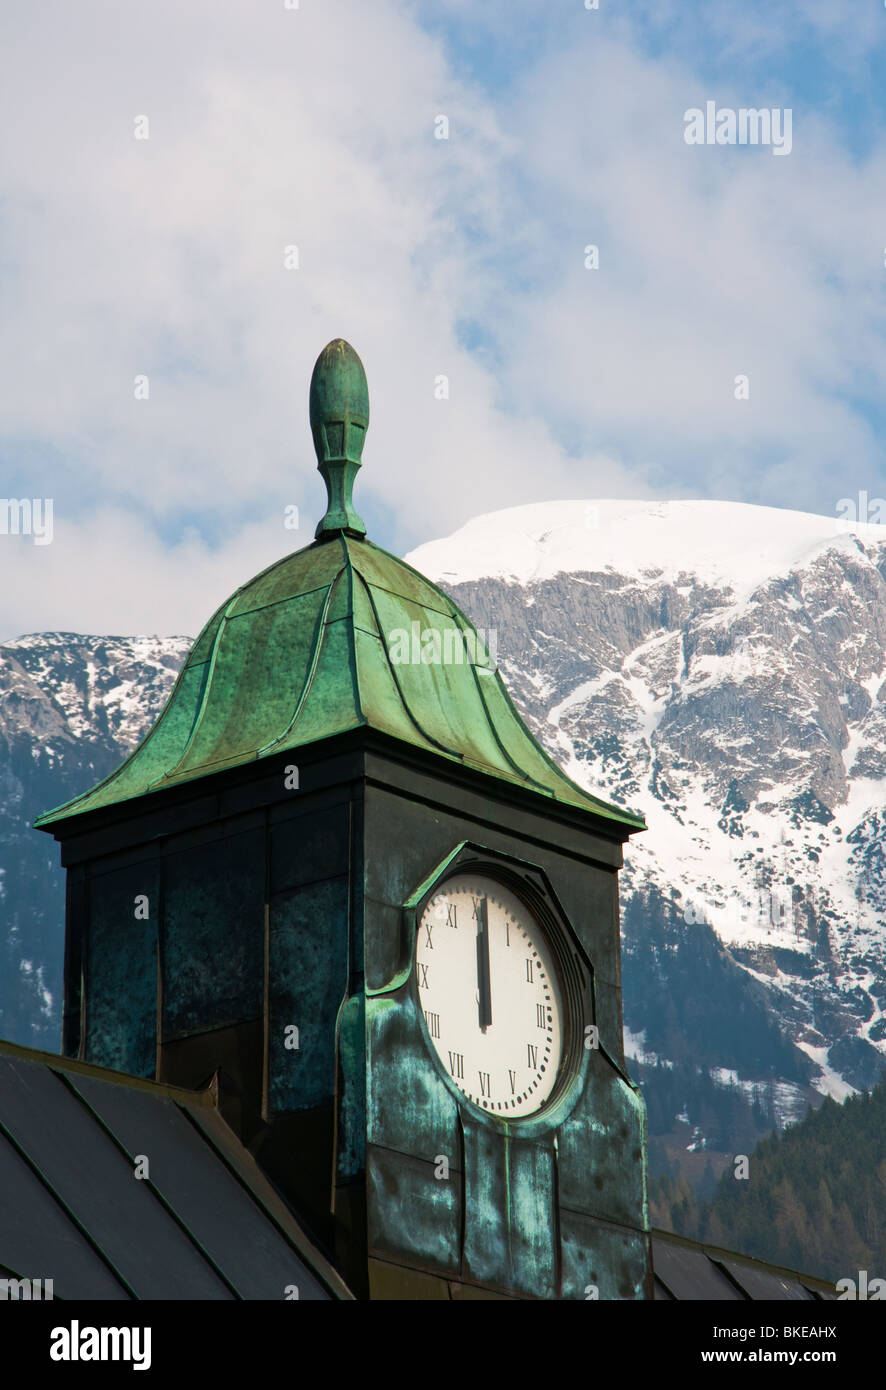 Königsee (King's Lake) clock tower in Bavarian Alps Stock Photo